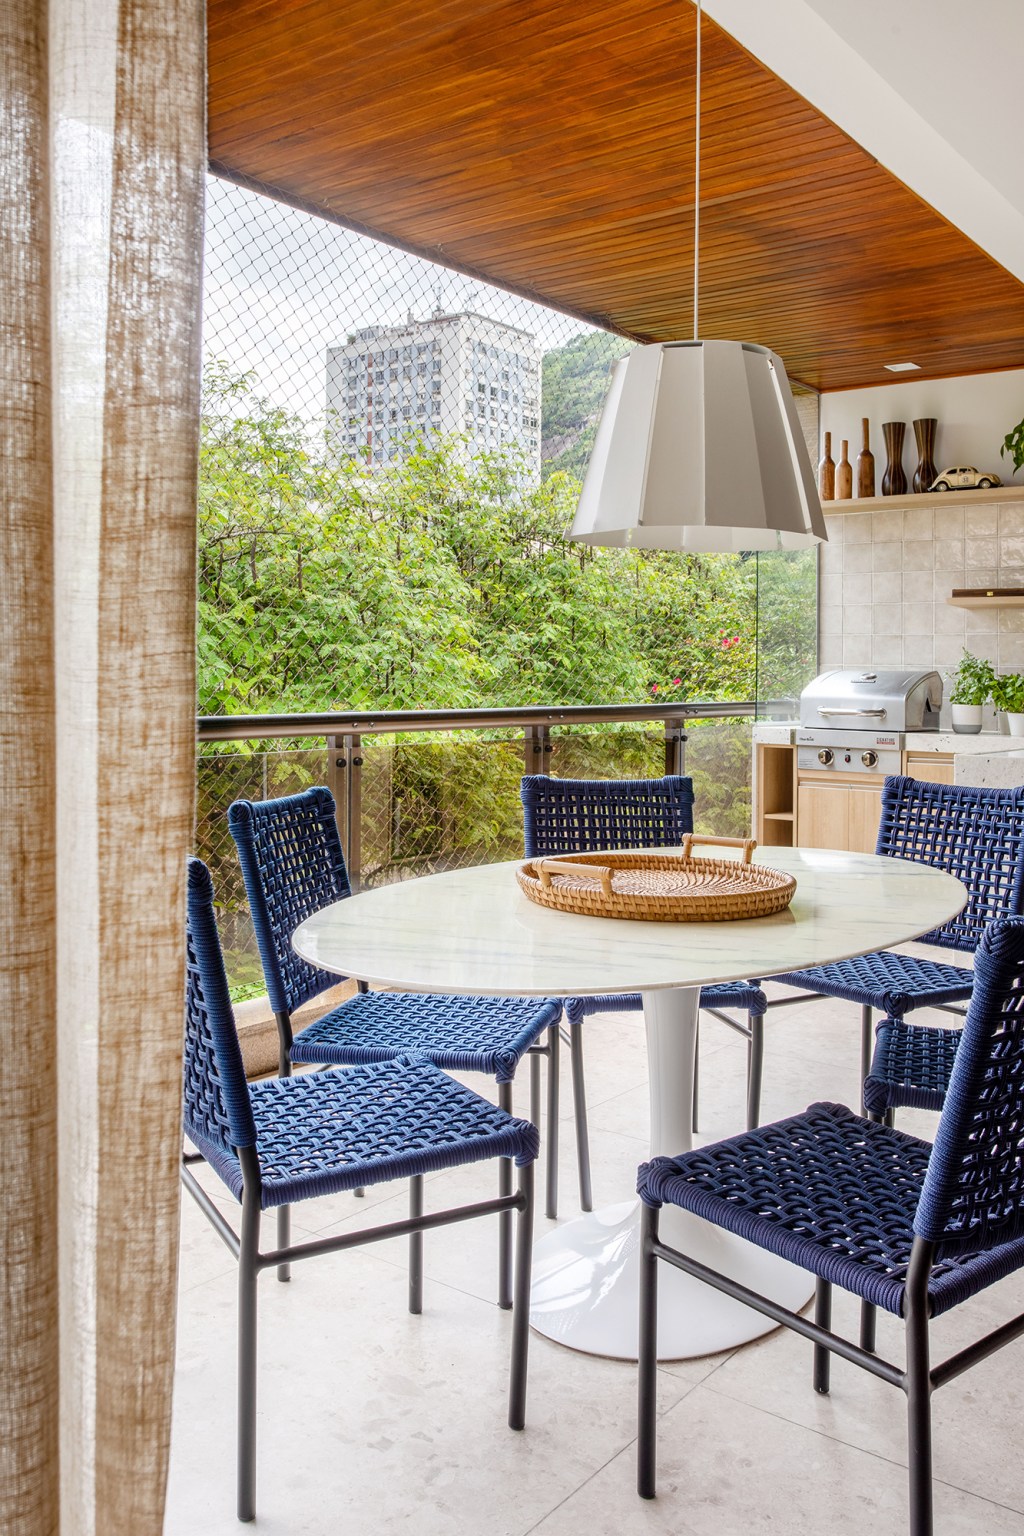 Apartamento 230 m² cara de casa para a família carioca. Ricardo Melo Rodrigo Passos decoracao casacor rio de janeiro varanda mesa cadeira gourmet churrasqueira